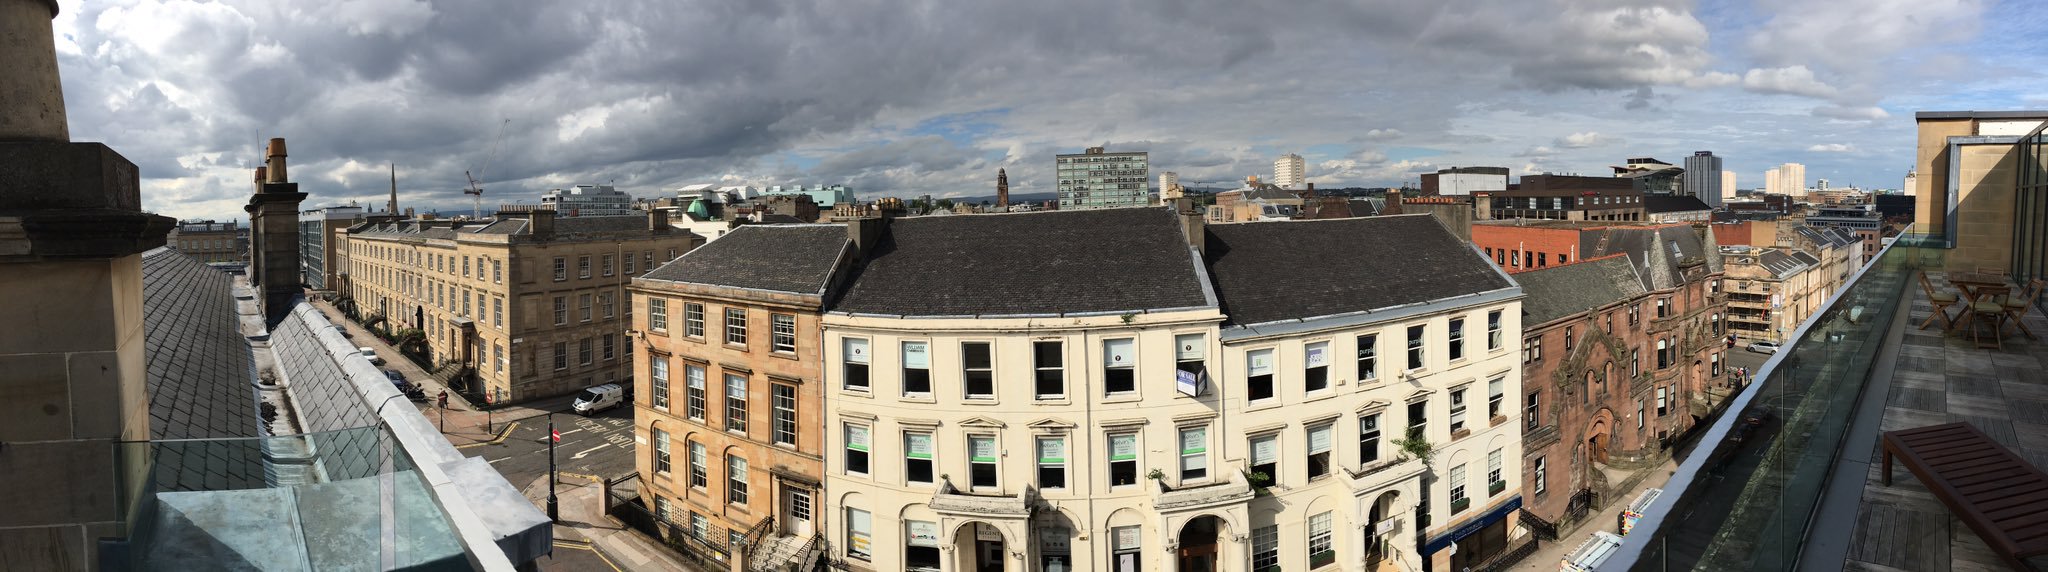 View from my hotel balcony in Glasgow. https://t.co/exM7oULKwm